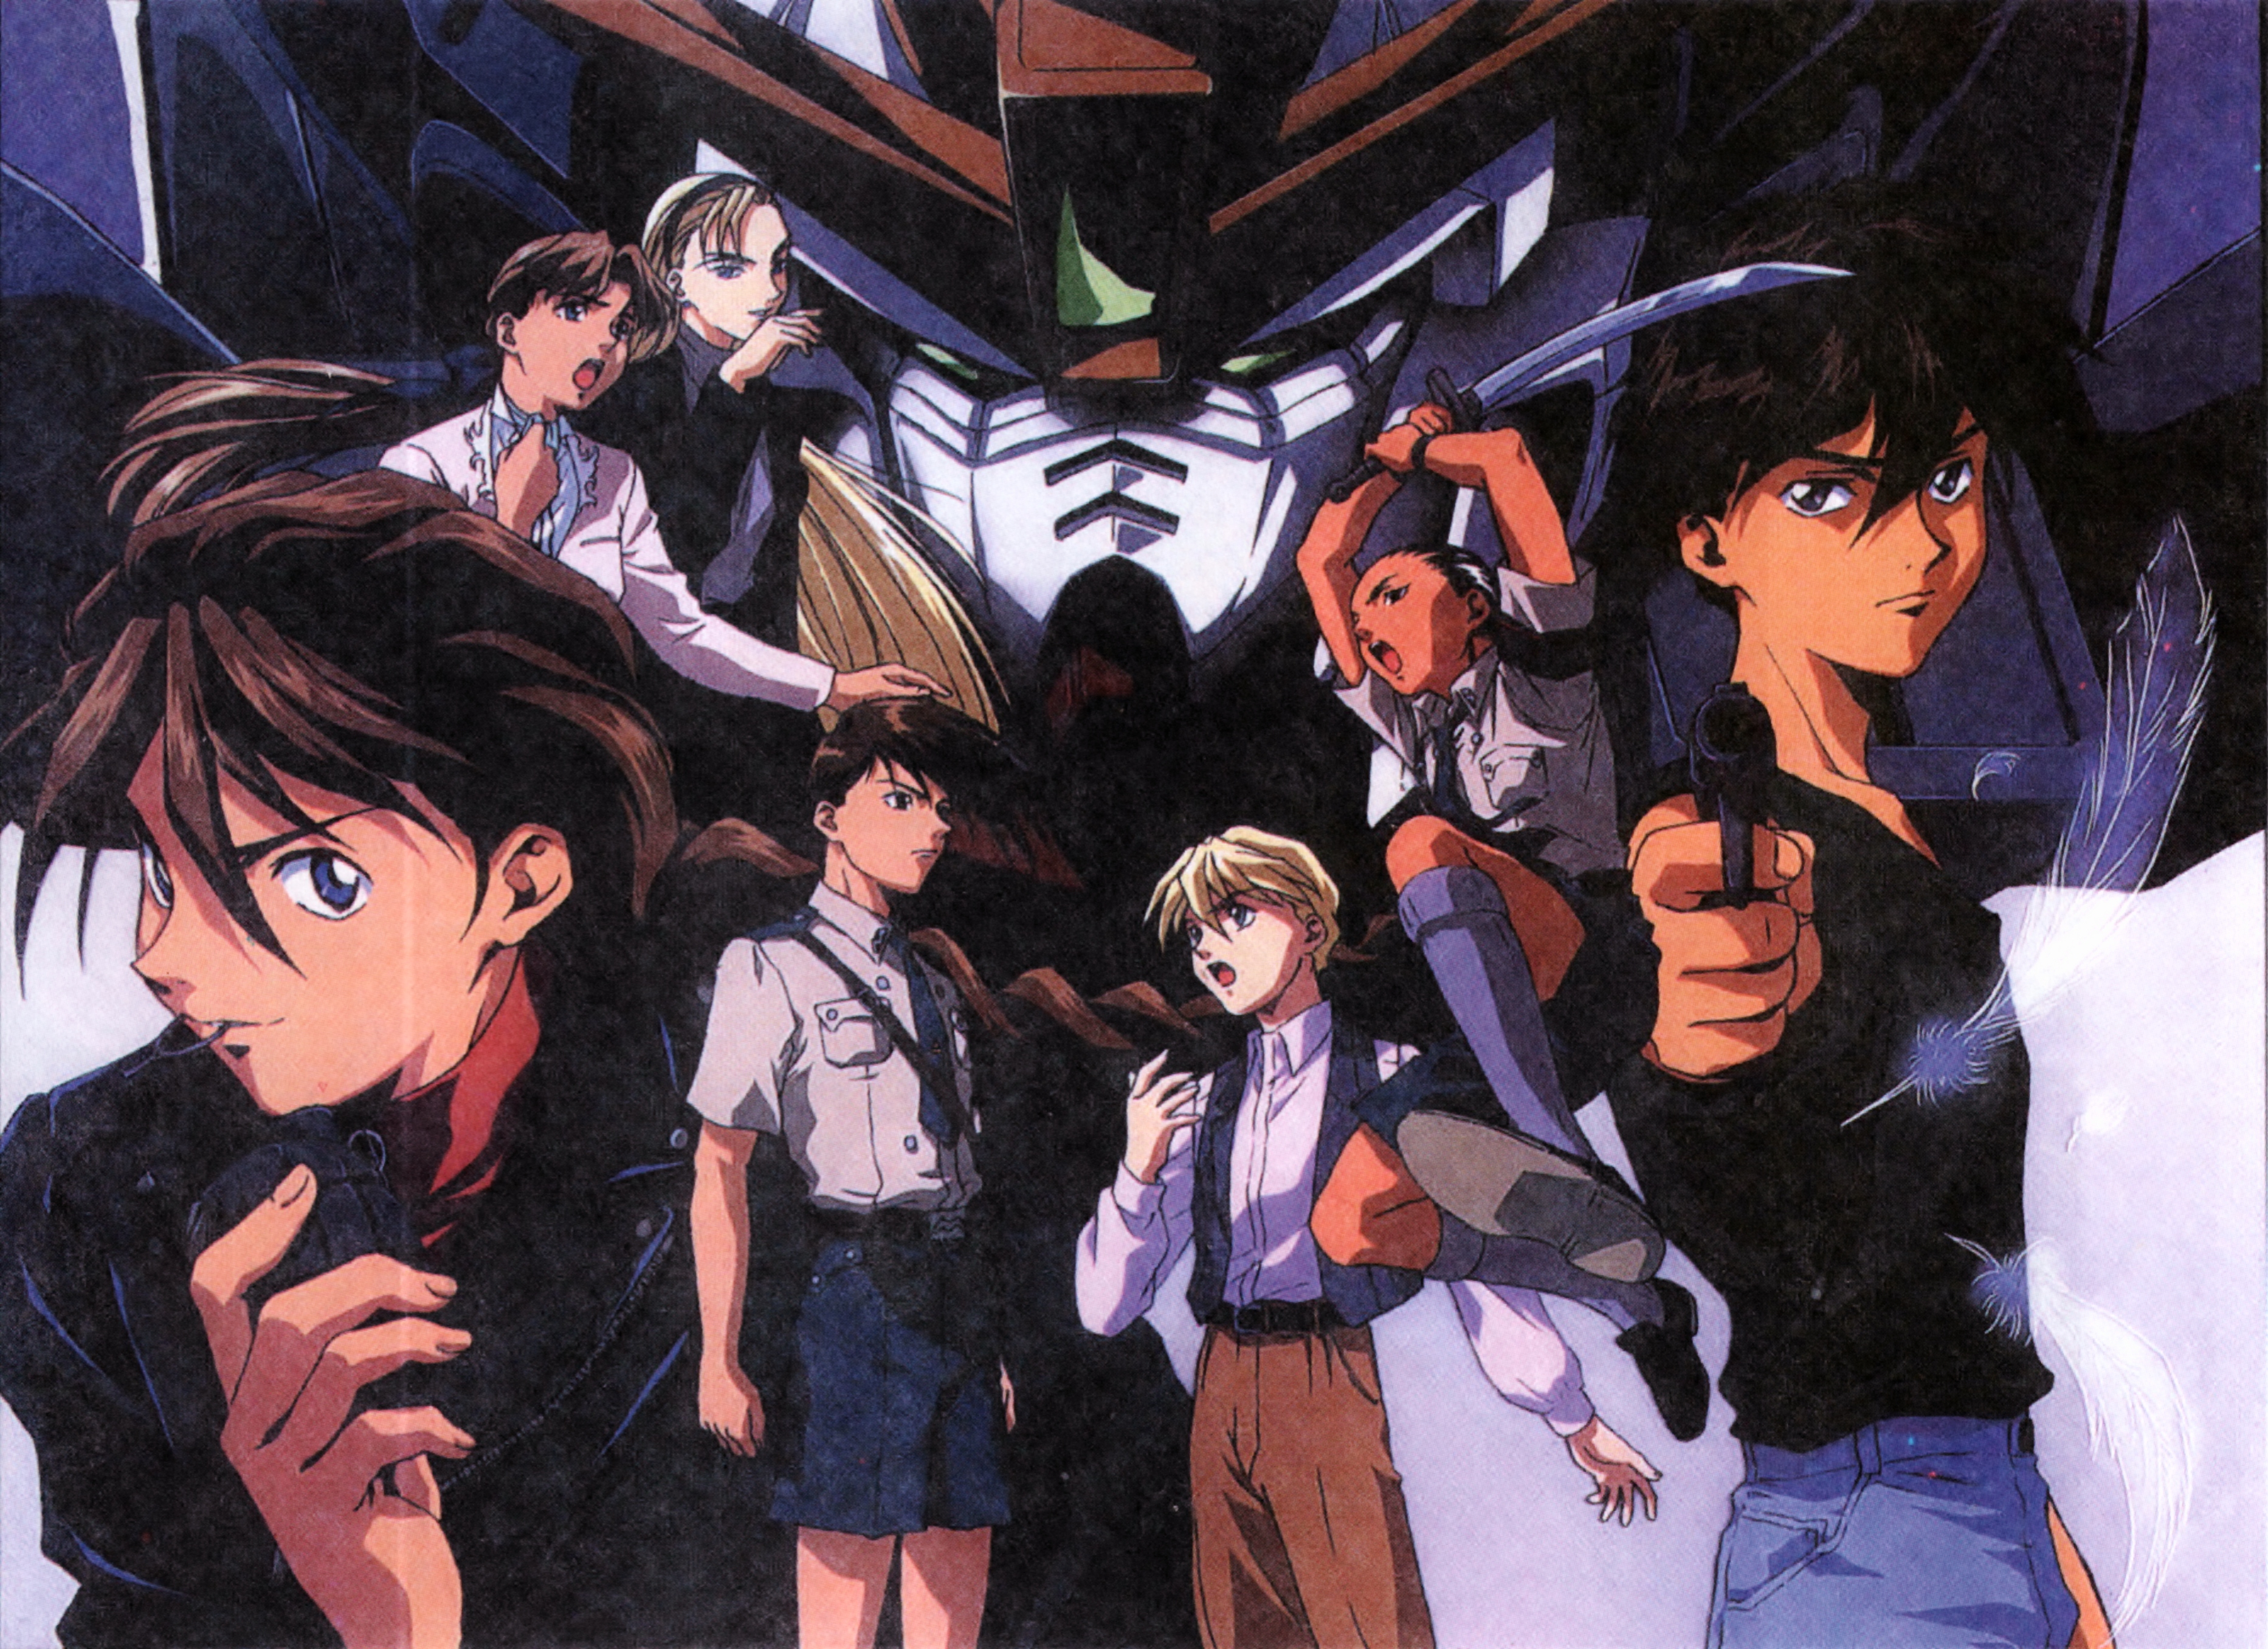 Mobile Suit Gundam Wing HD wallpapers, Desktop wallpaper - most viewed